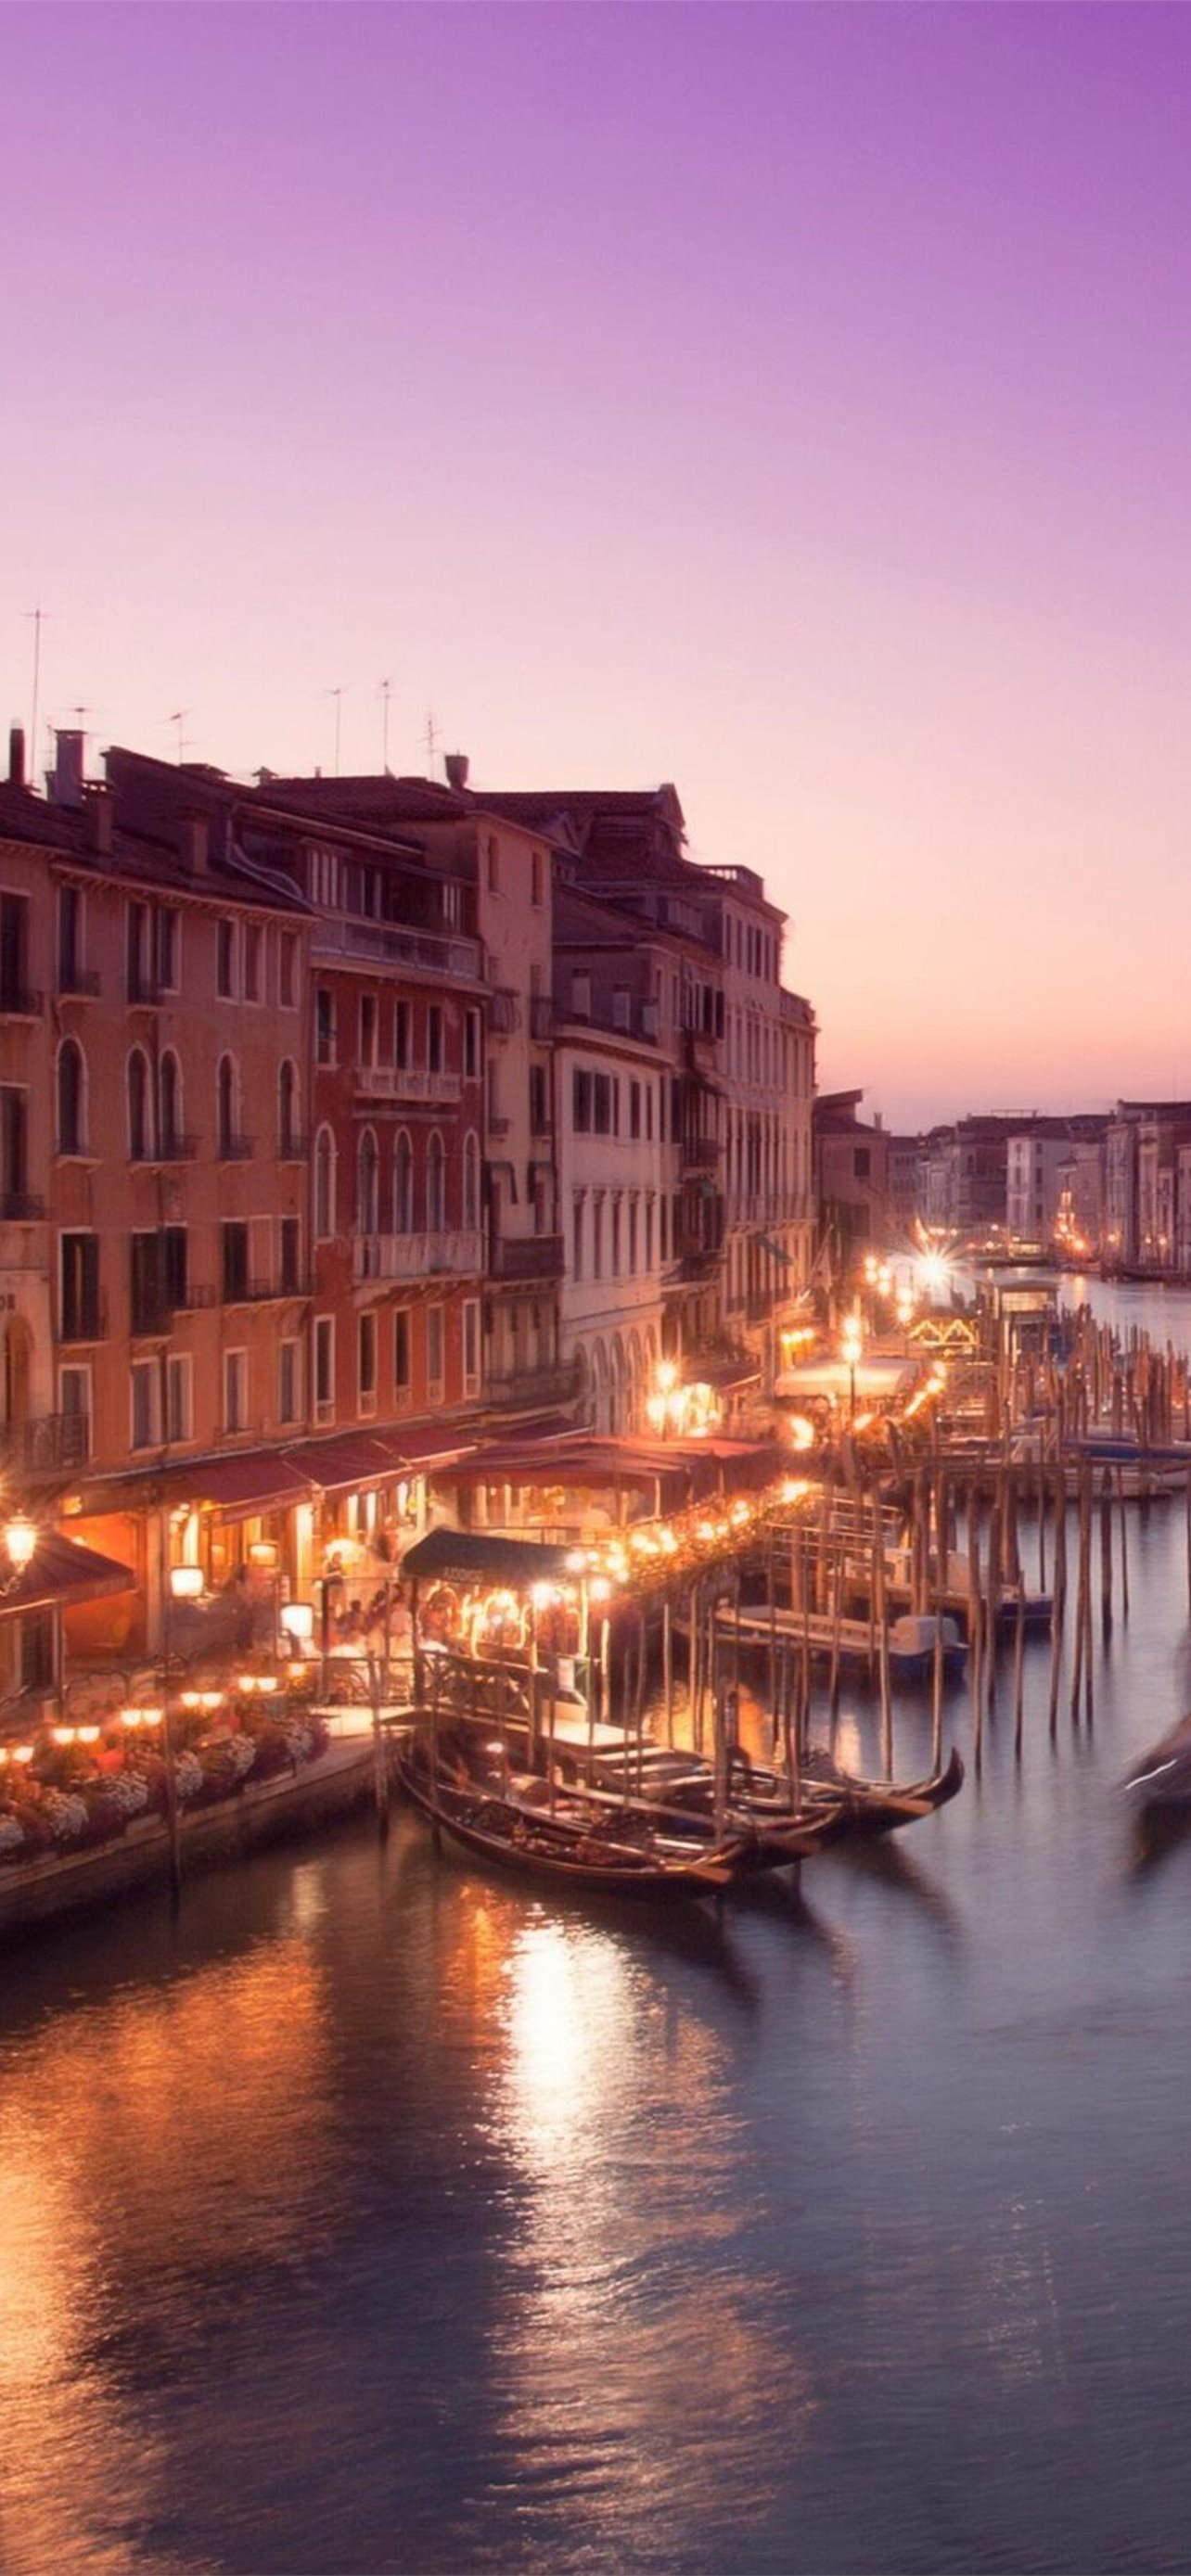 Man Made Venice Cities Italy canal city gondola light night 1080x1920  Mobile Wallpaper  배경